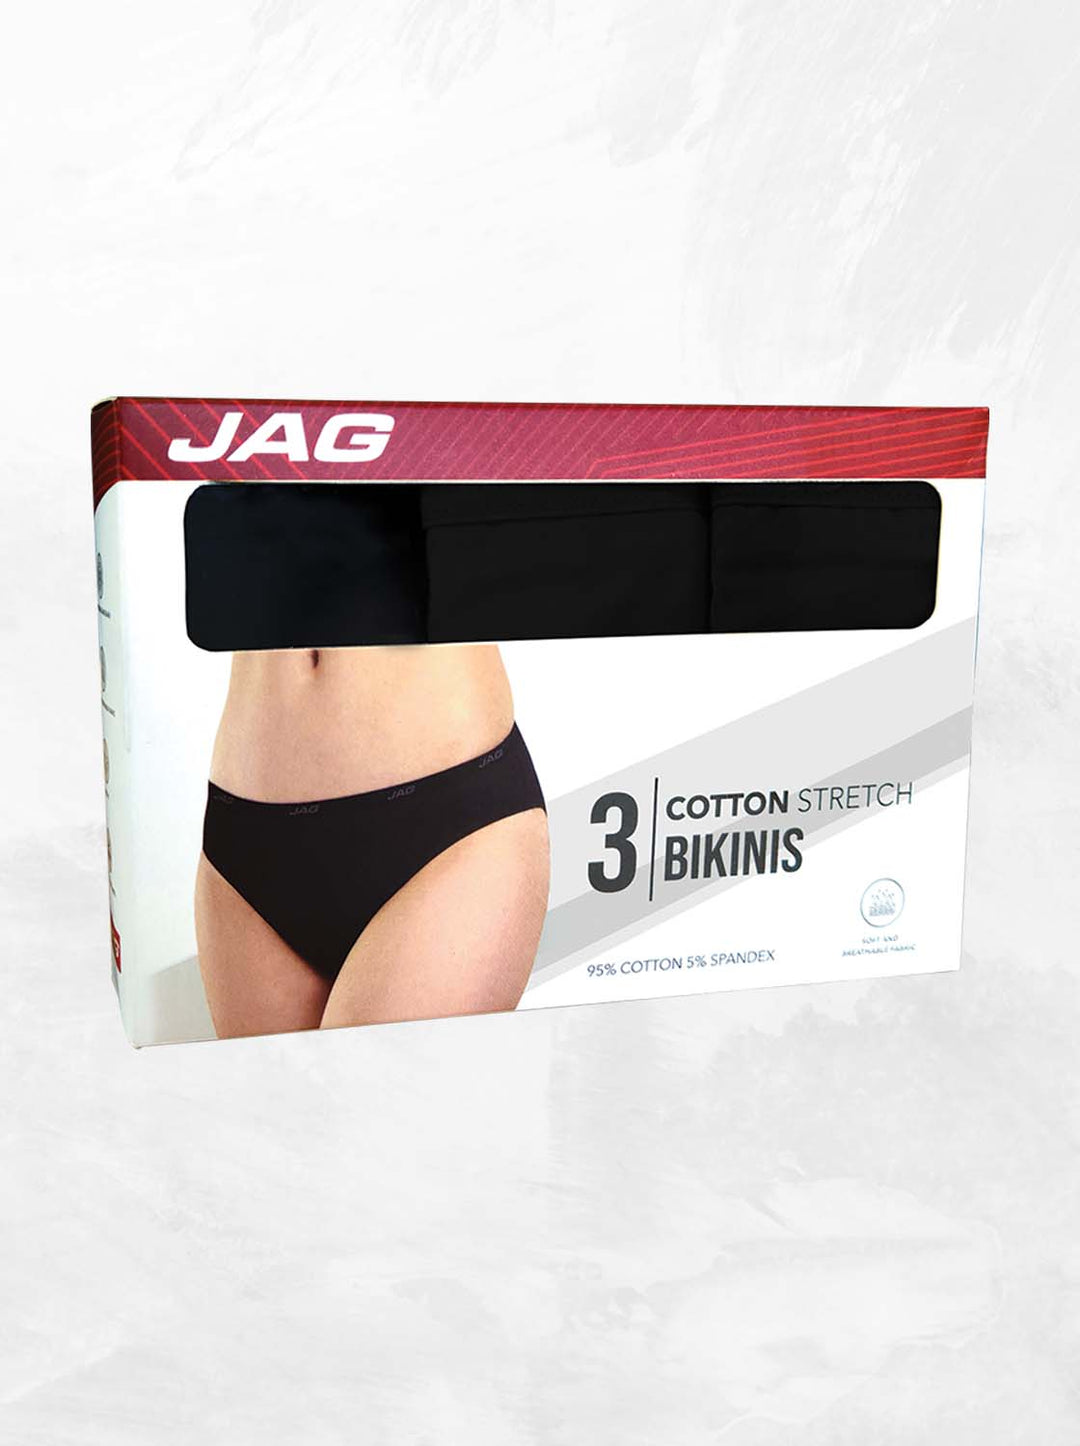 Jag Women's Underwear Cotton Stretch Bikini 3 in 1 in Black